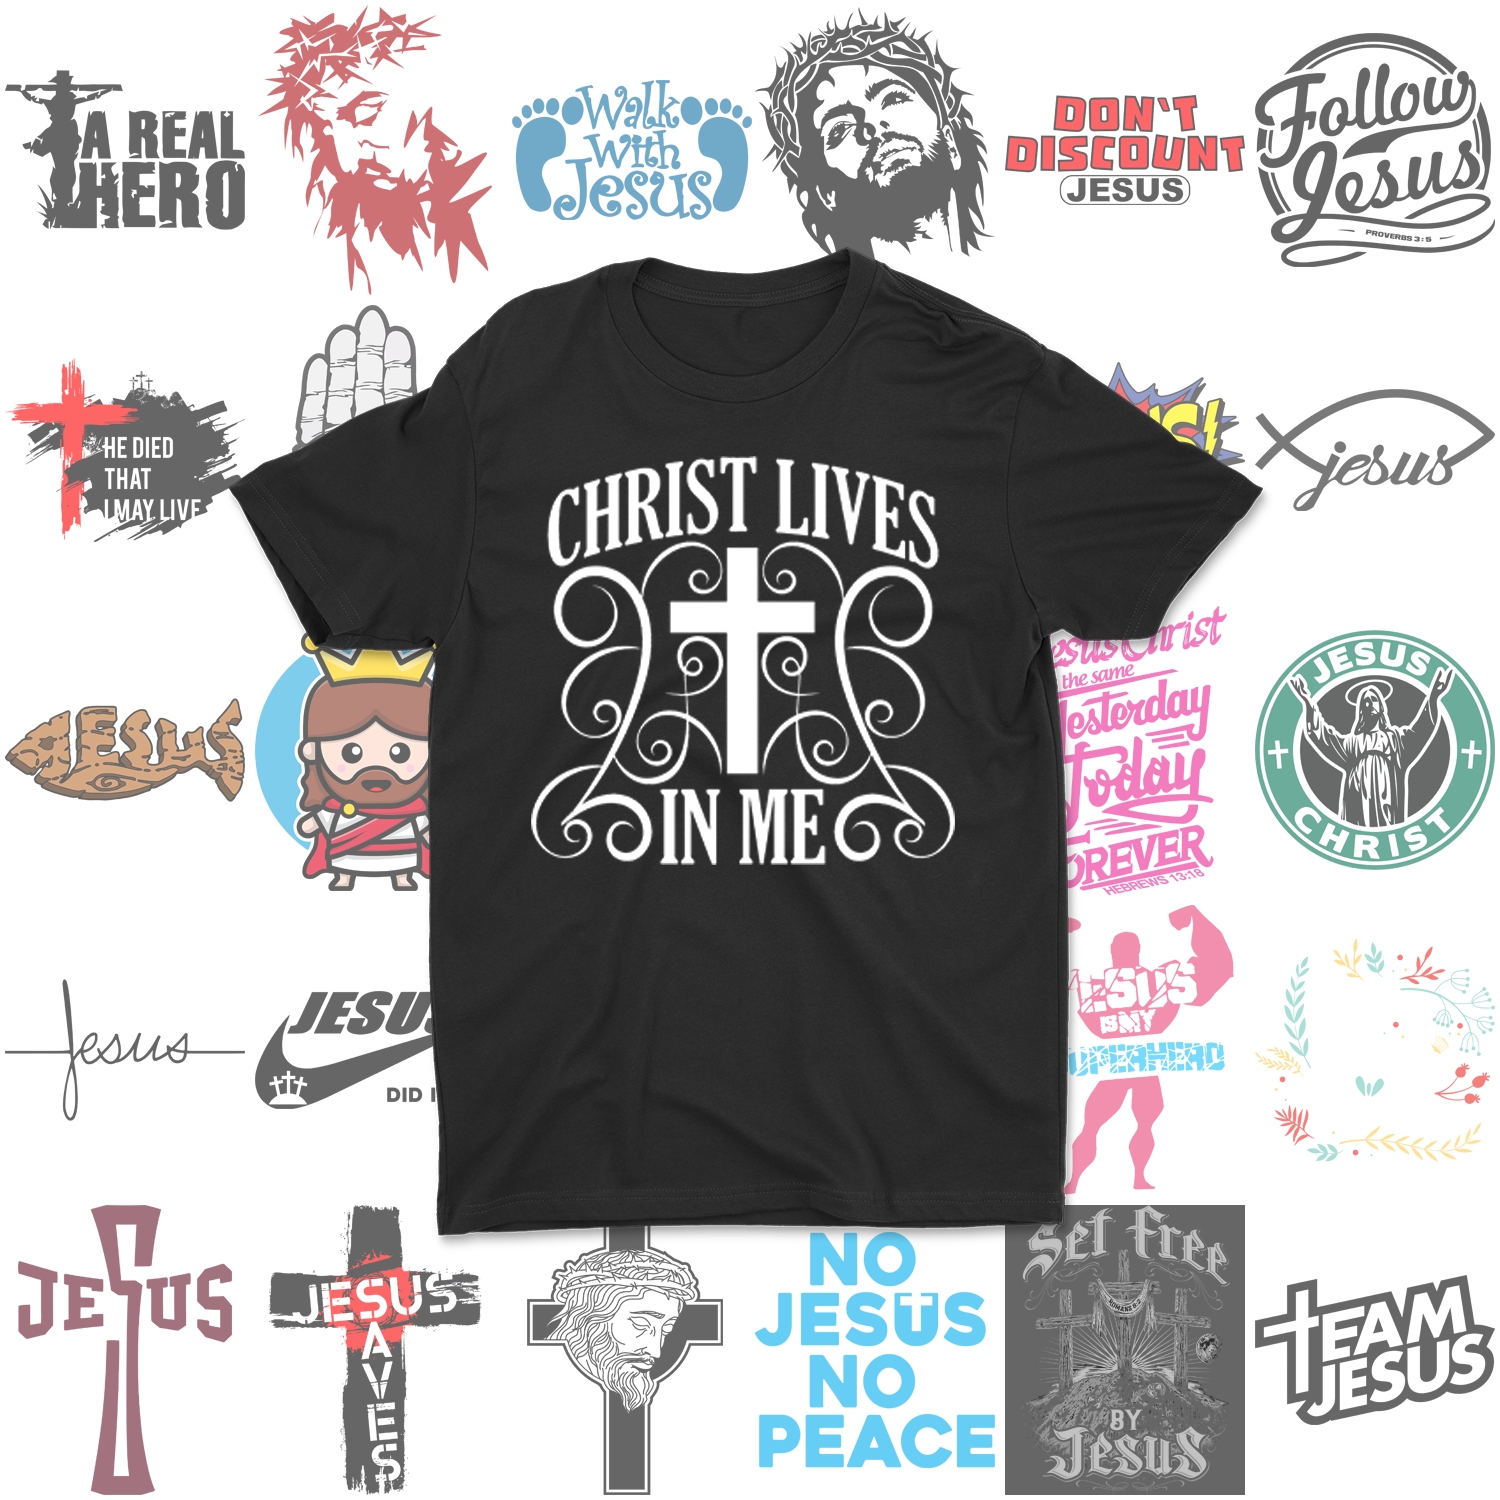 Gospel "Jesus" Design T-Shirt Collection